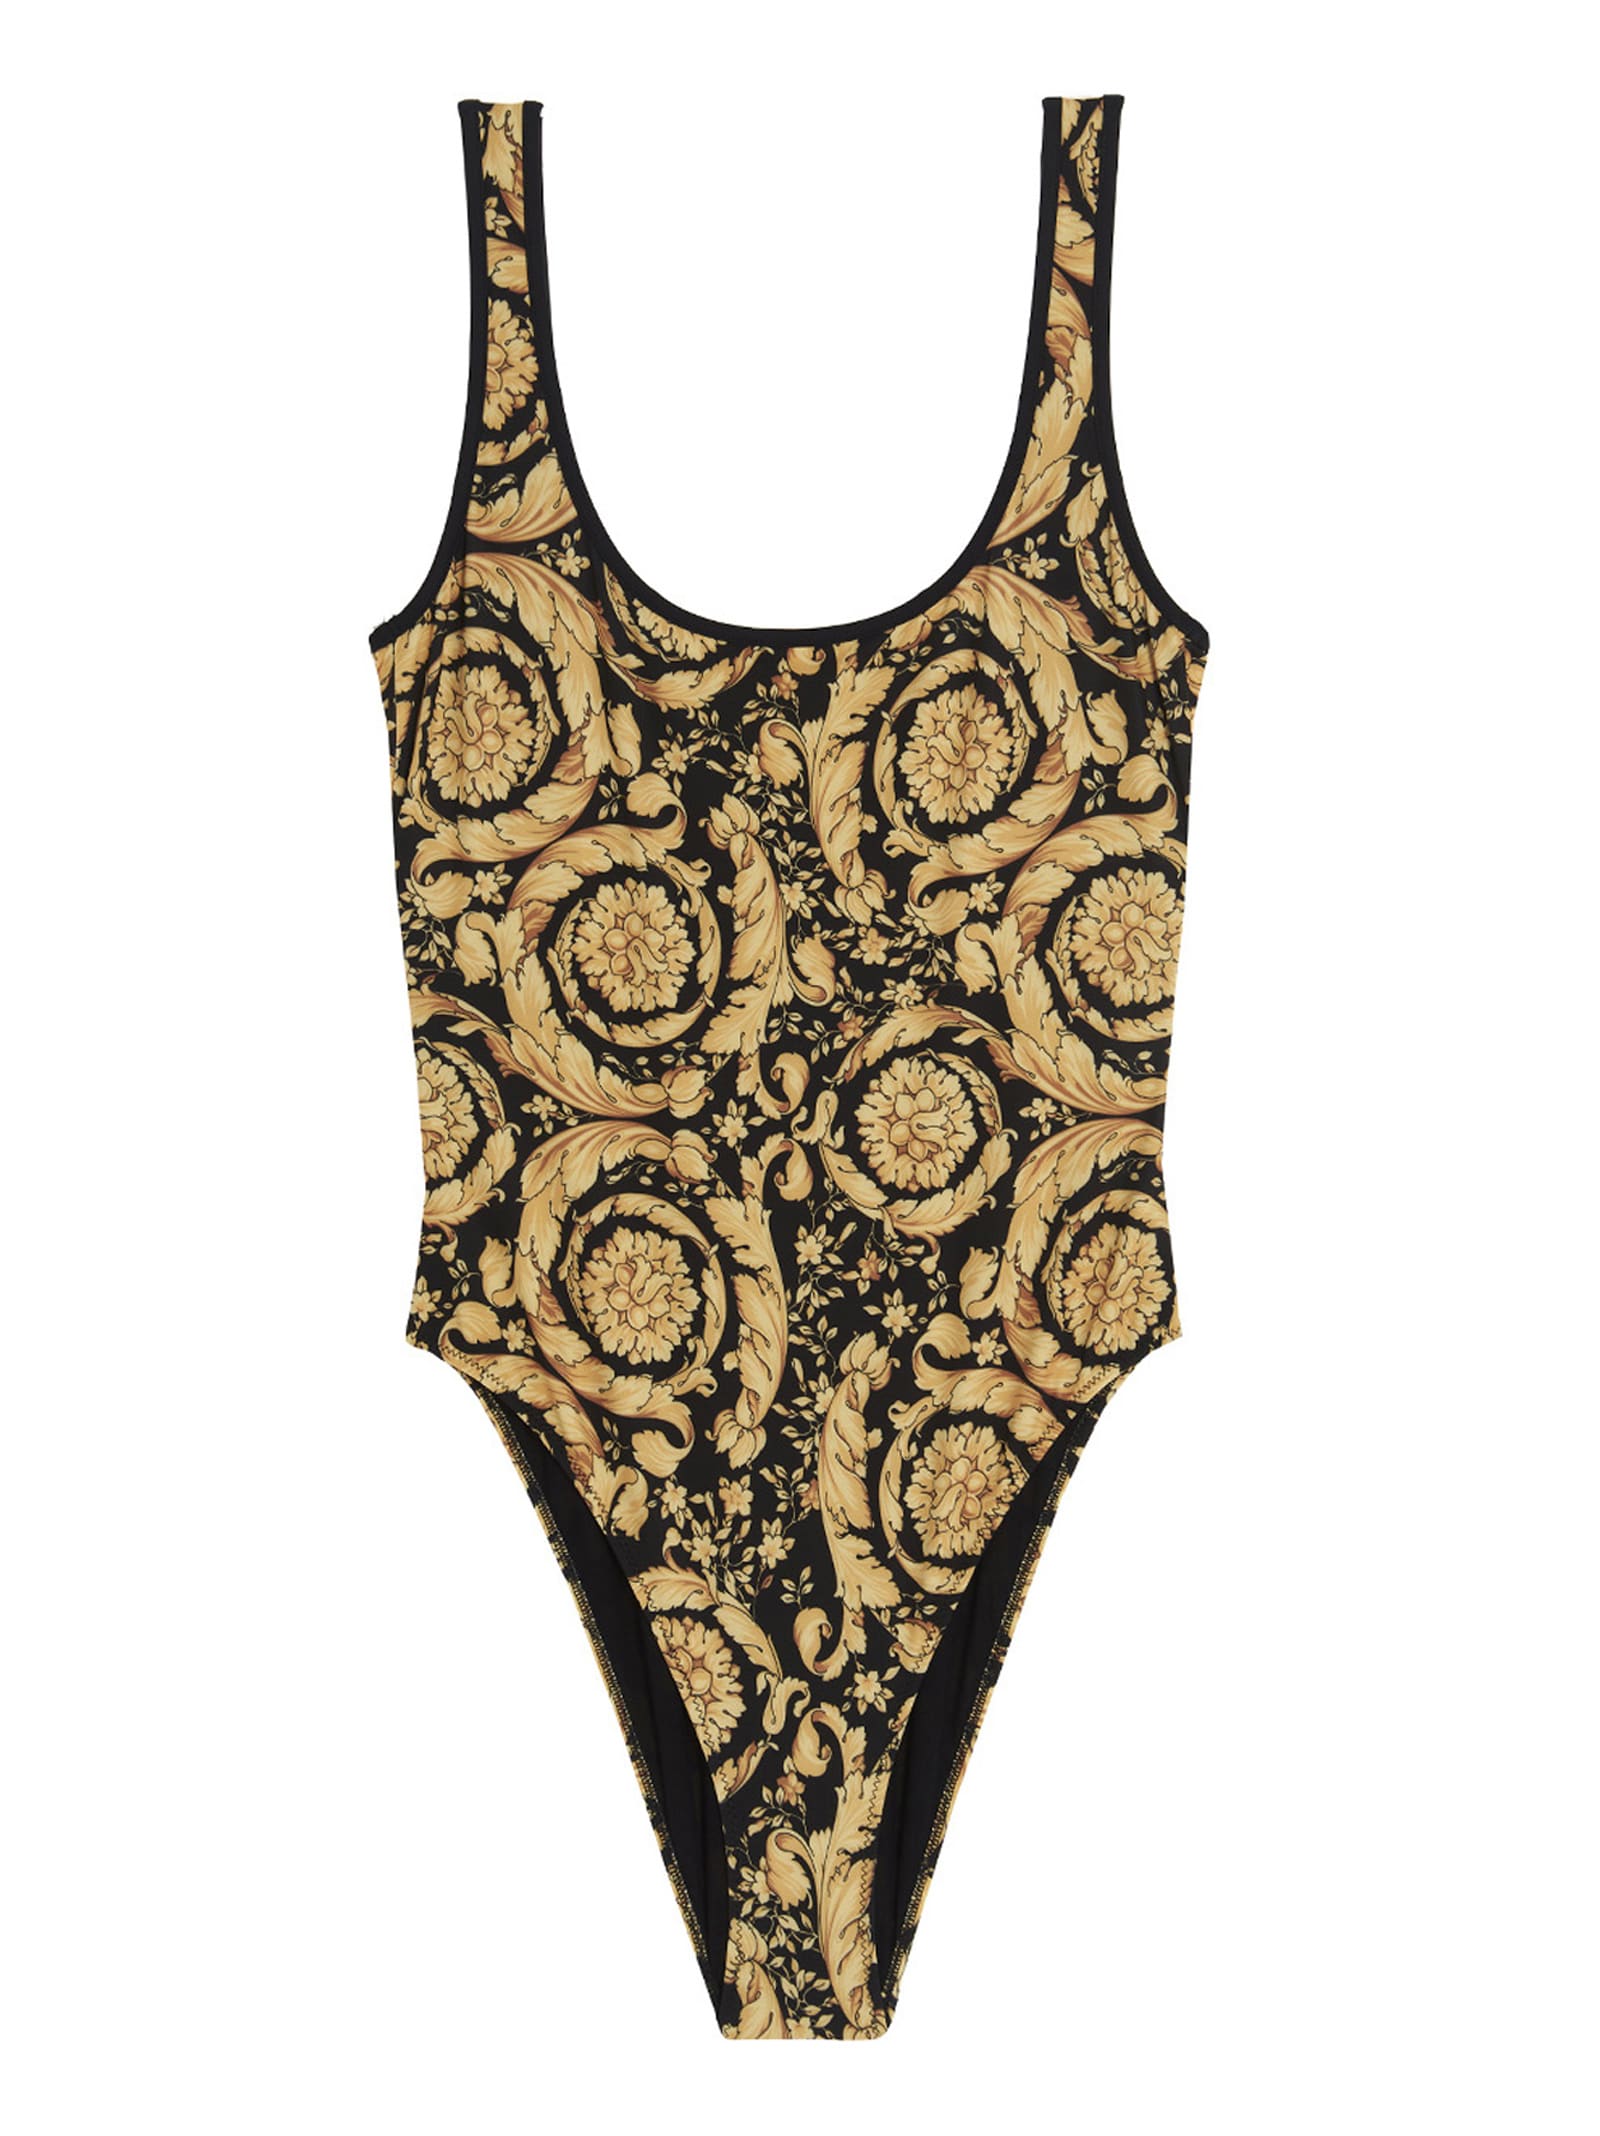 Versace barocco One-piece Swimsuit